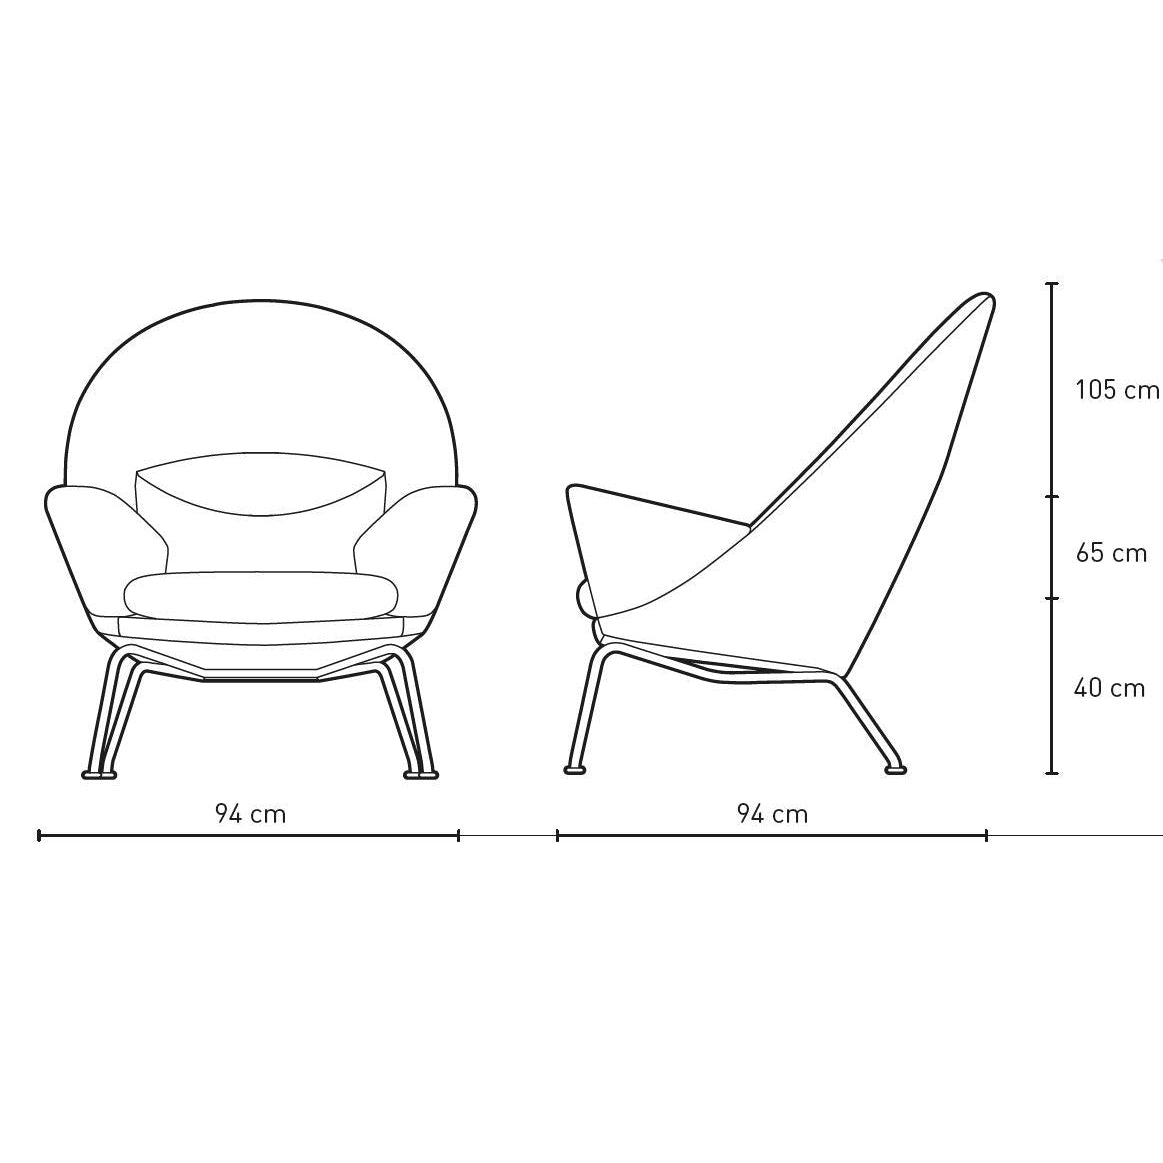 Carl Hansen CH468 Oculus stol, stål/sort læder